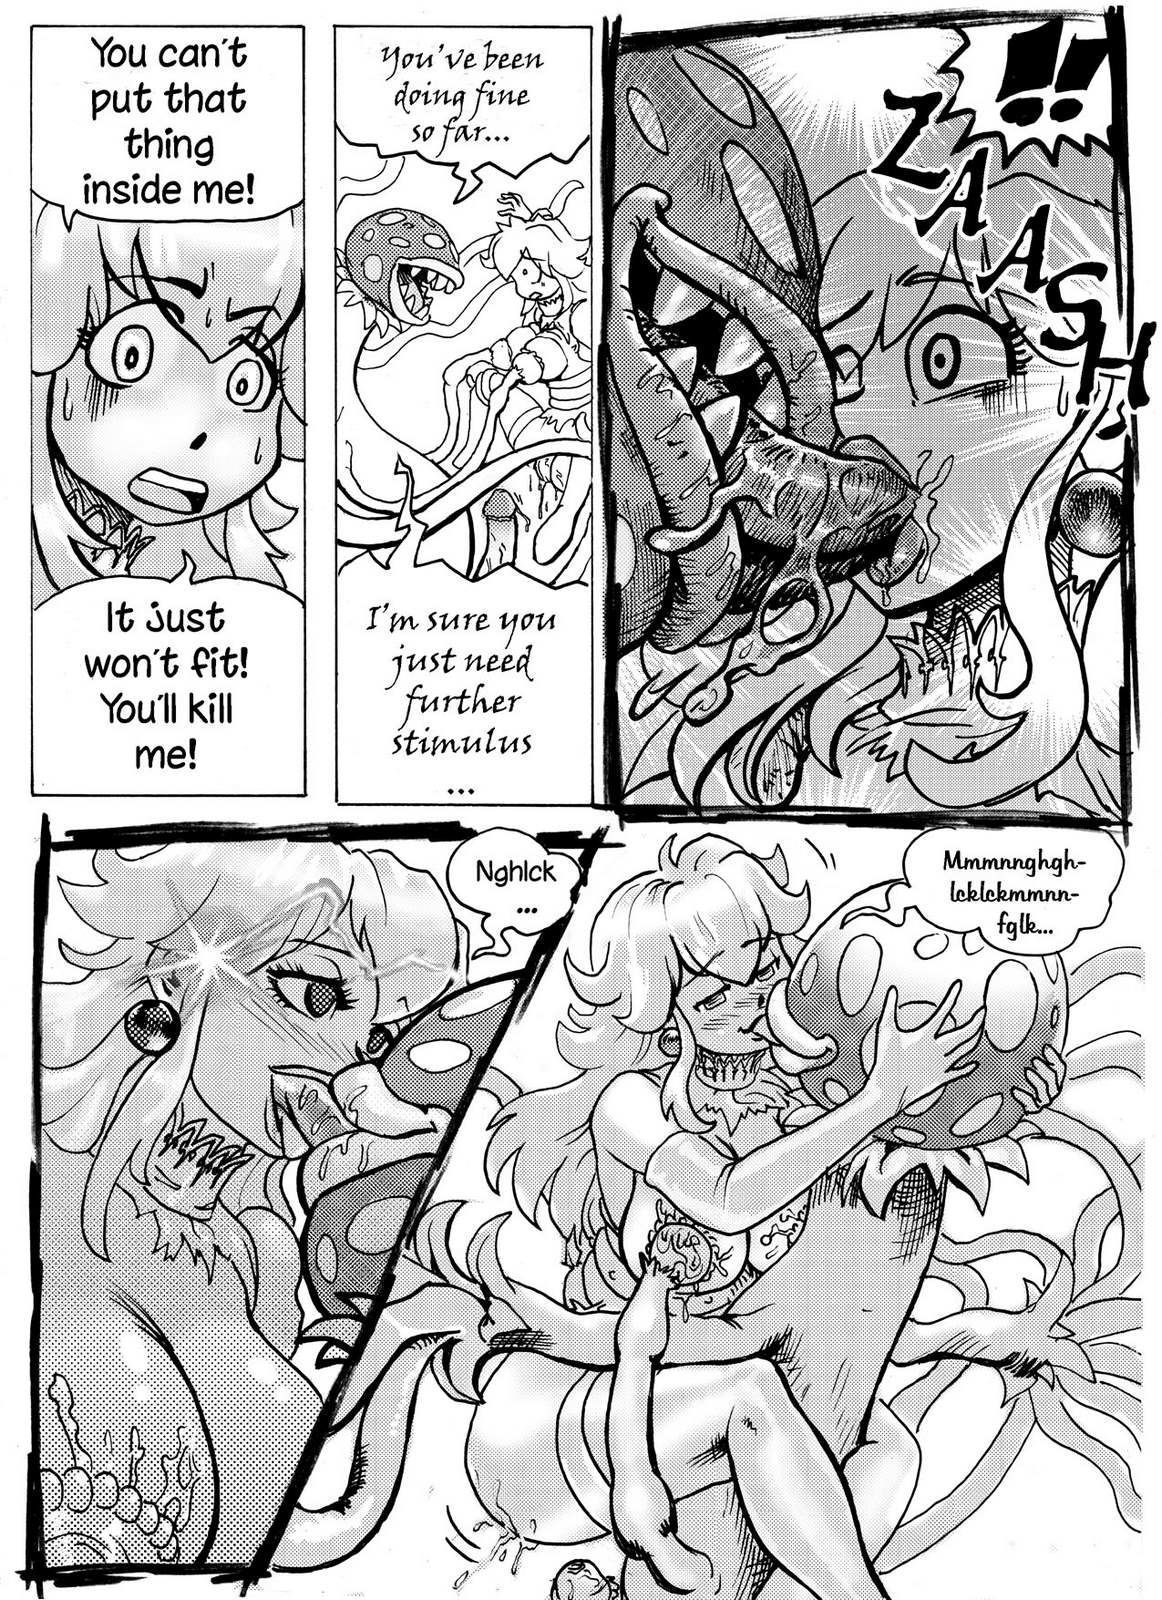 Super Wild Adventure 2 by Saikyo3B page 13